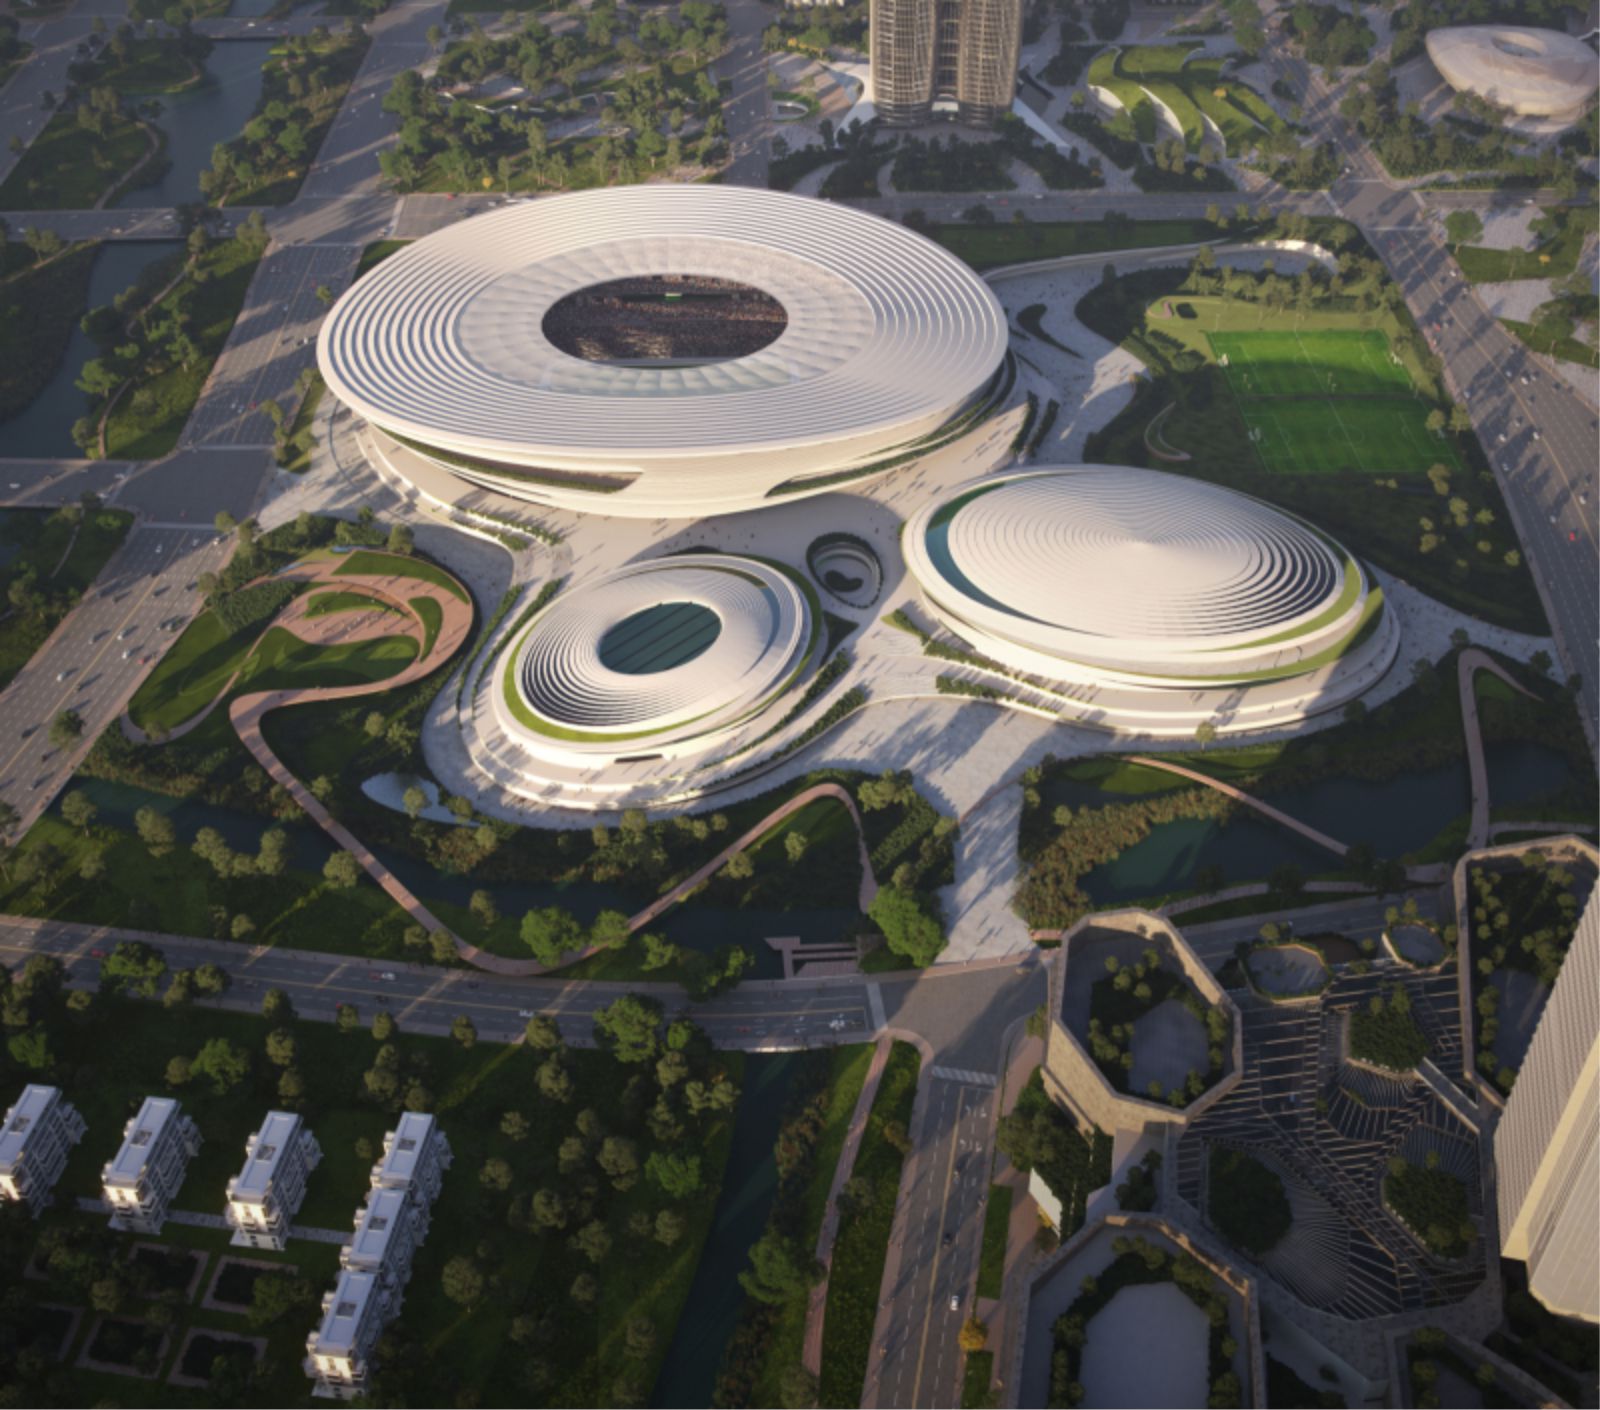 Hangzhou International Sports Centre